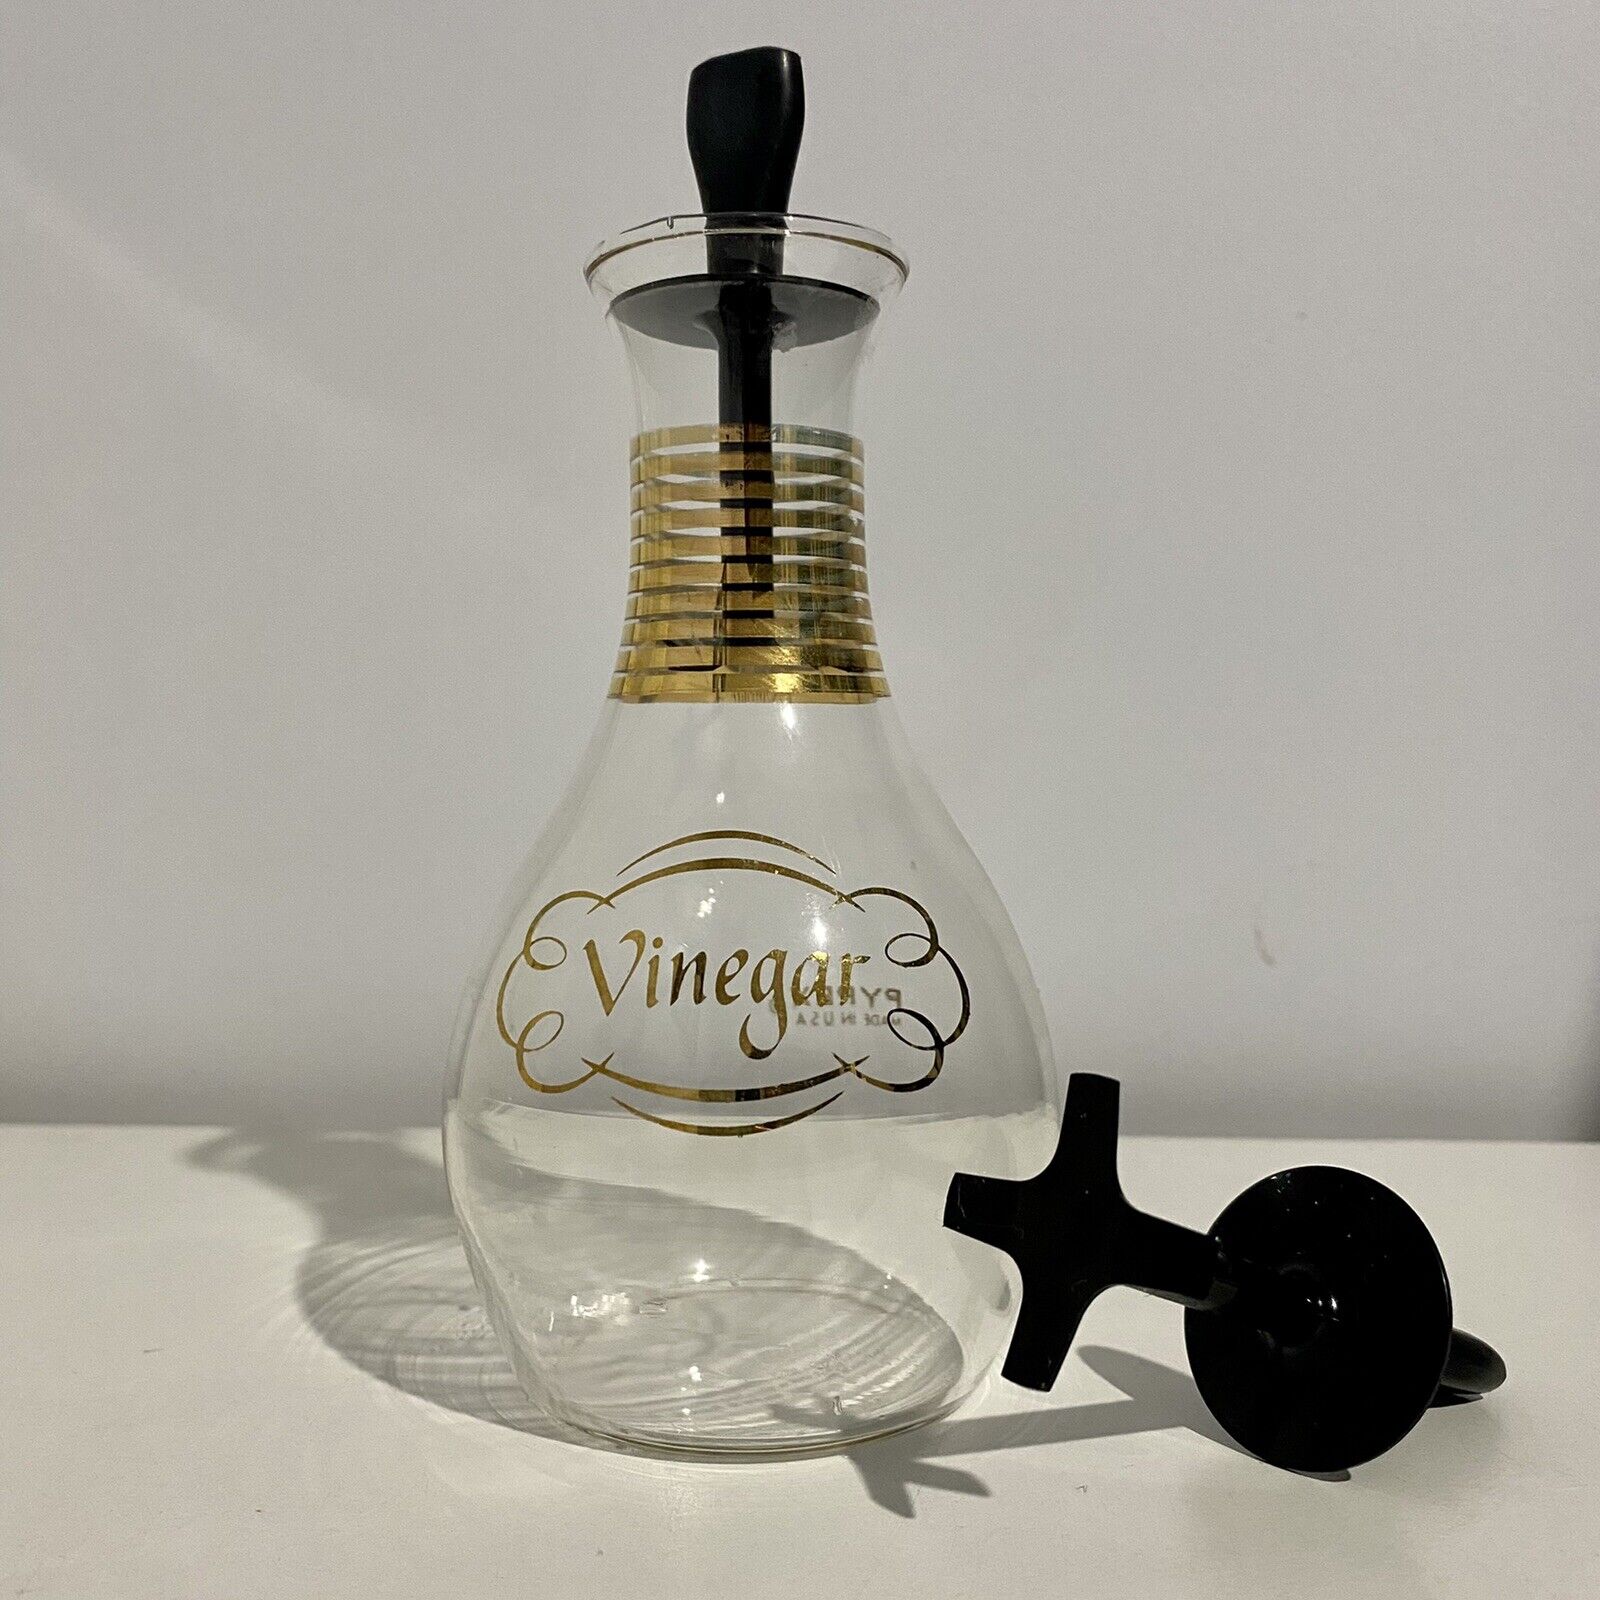 Pyrex Vinegar Cruet Bottle Dispenser Gold Accents Vintage With Spare Stopper